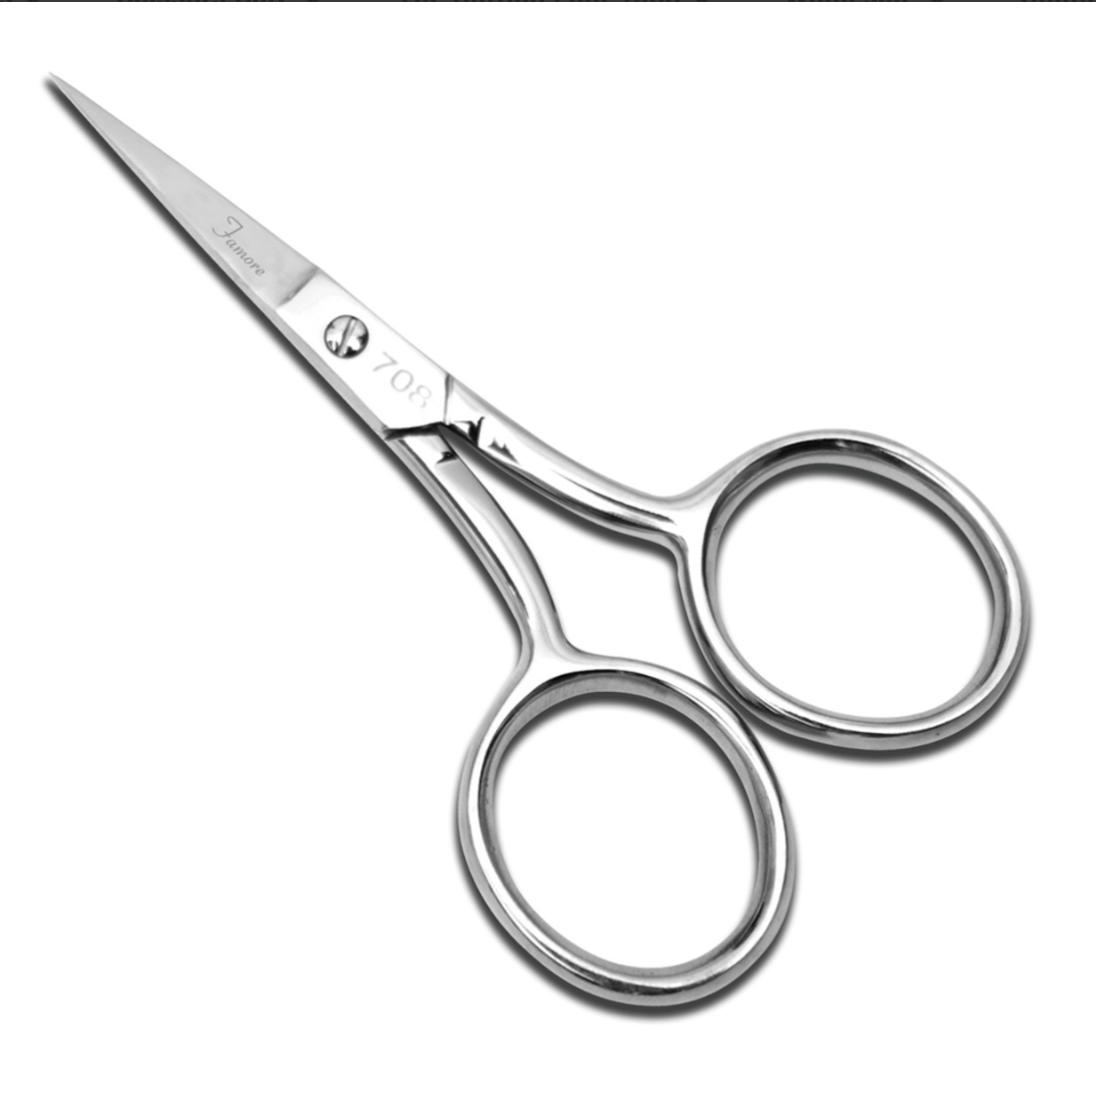 Scissors: Fine Tip by Famore